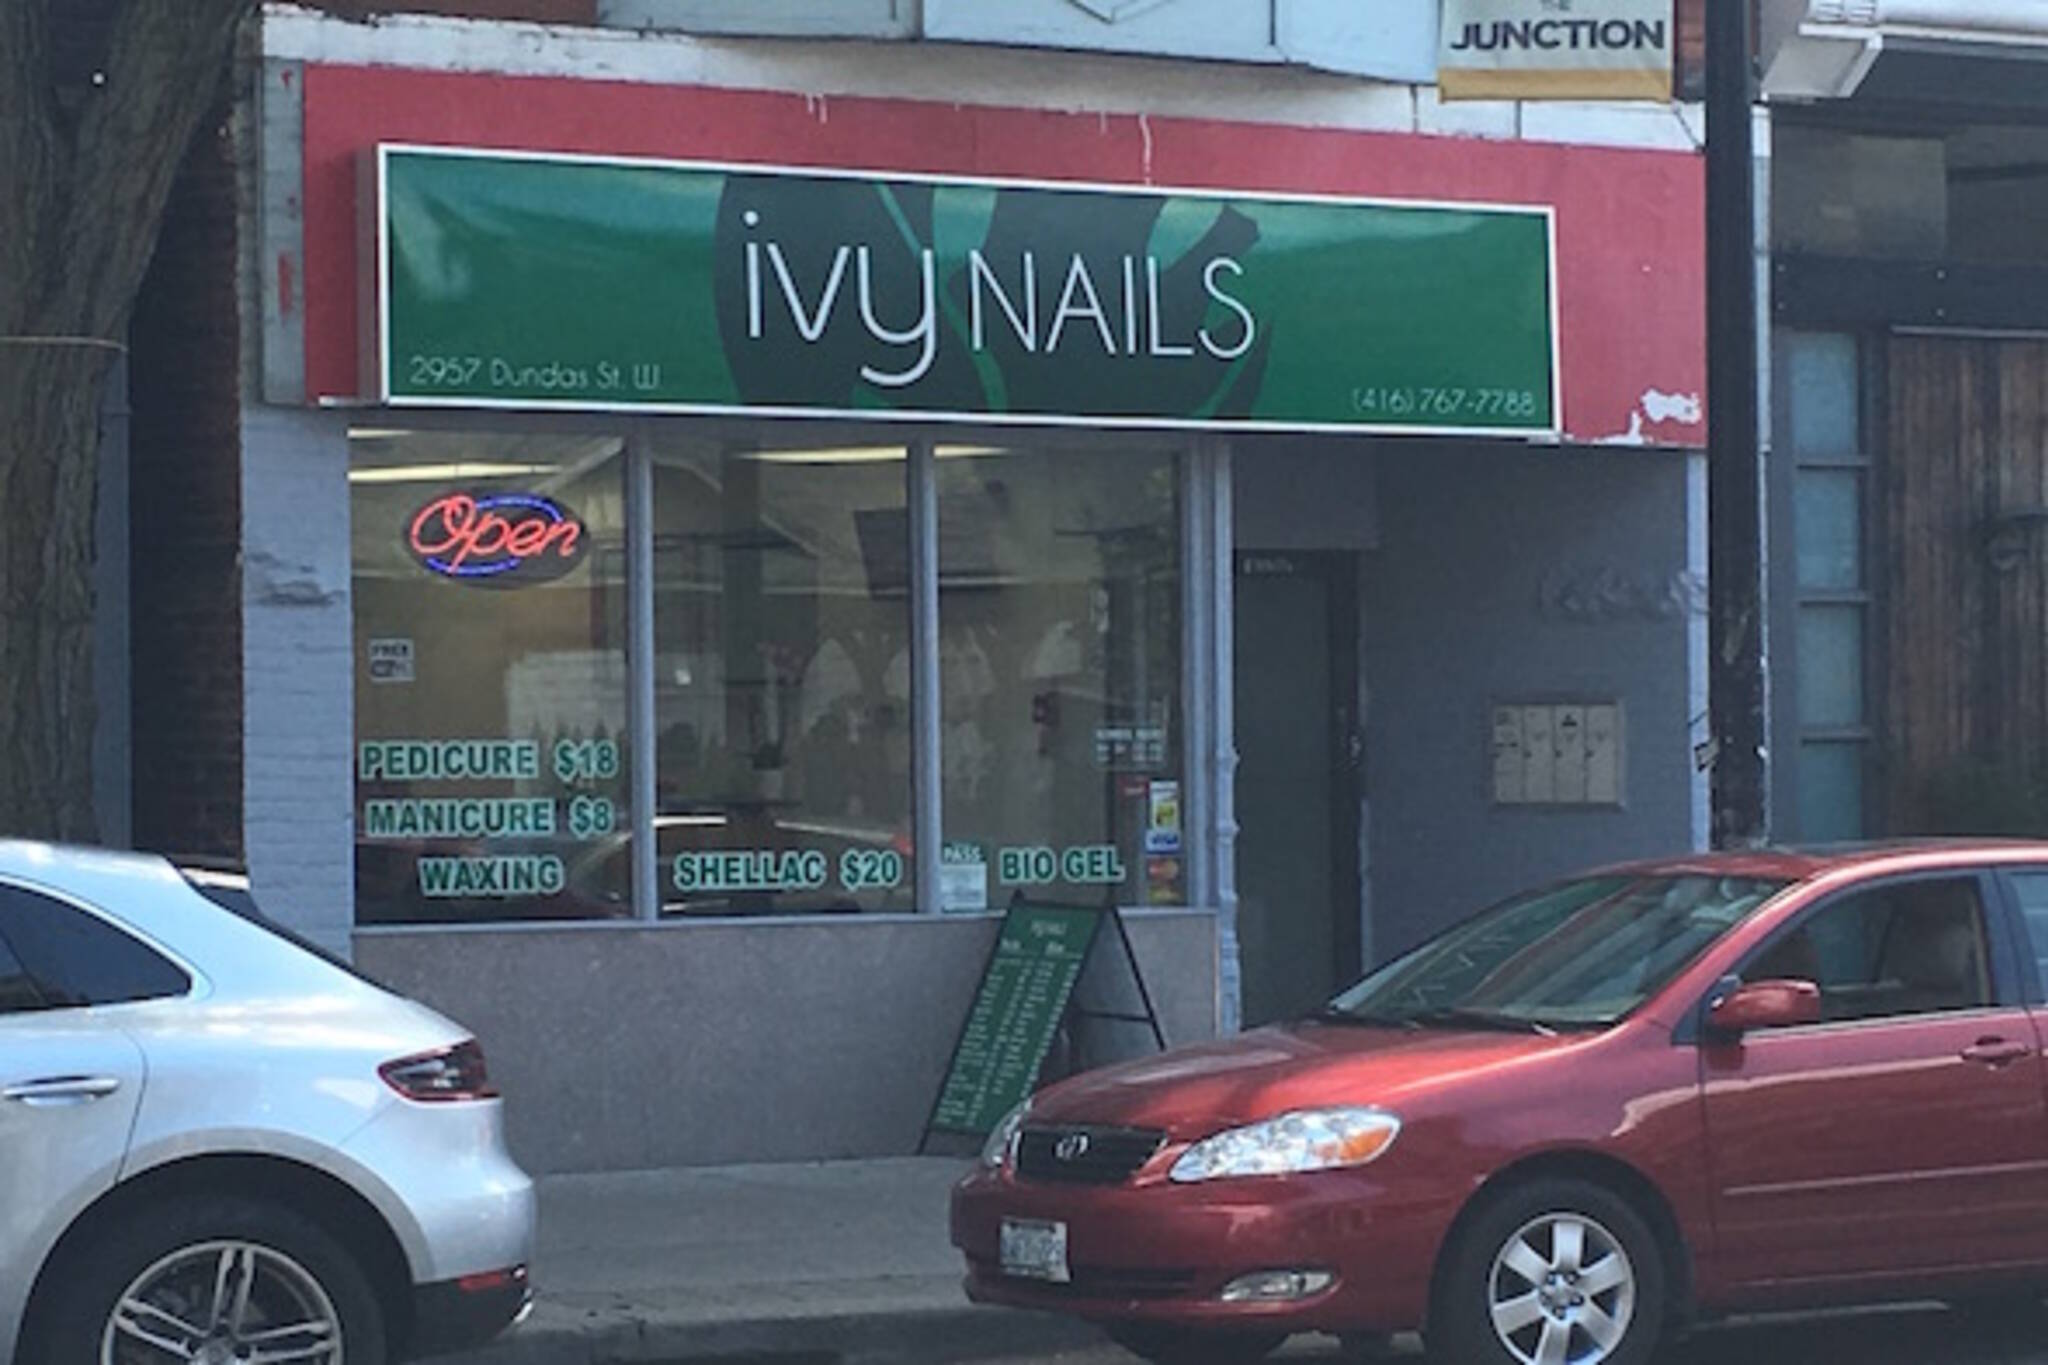 Ivy Nails Toronto